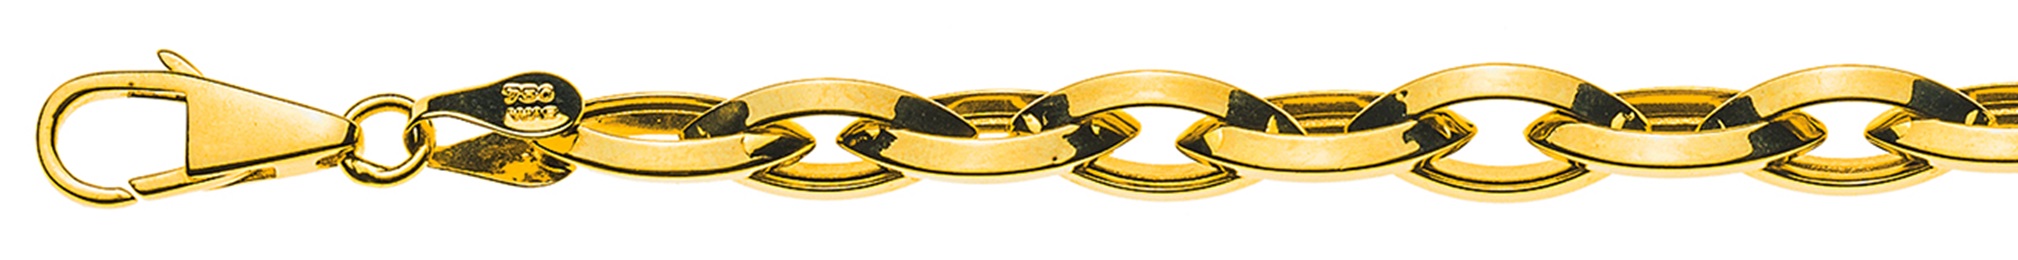 AURONOS Prestige Necklace yellow gold 18K navette chain semi-solid knife edge 45cm 6.6mm